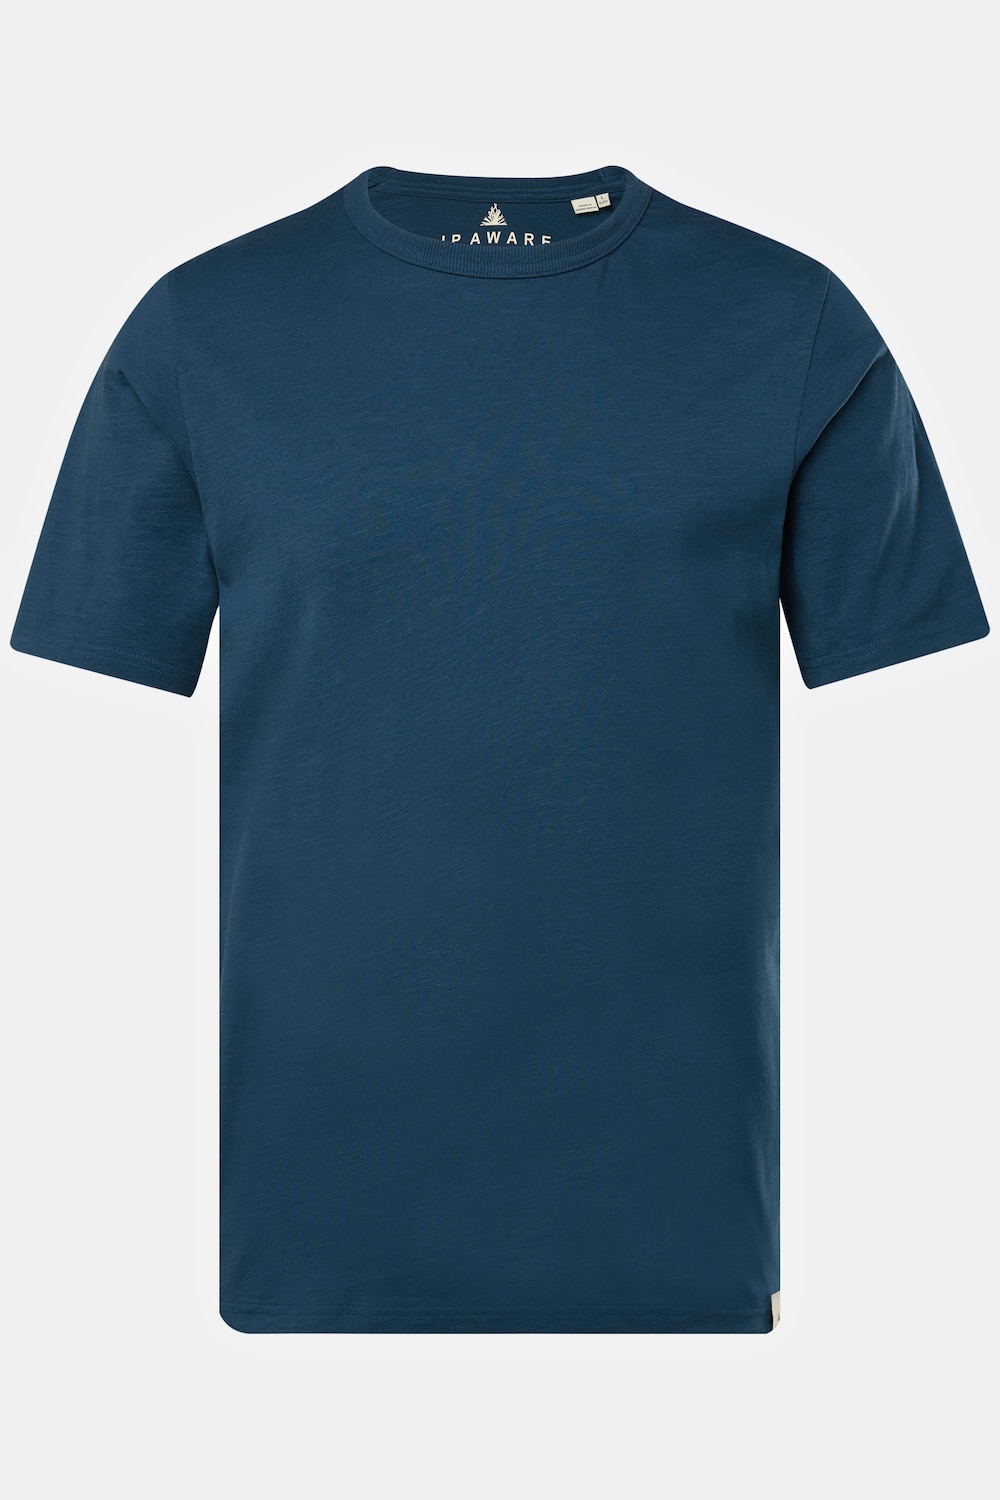 Grote Maten JP AWARE T-shirt, Heren, blauw, Maat: 5XL, Katoen, JP-Aware